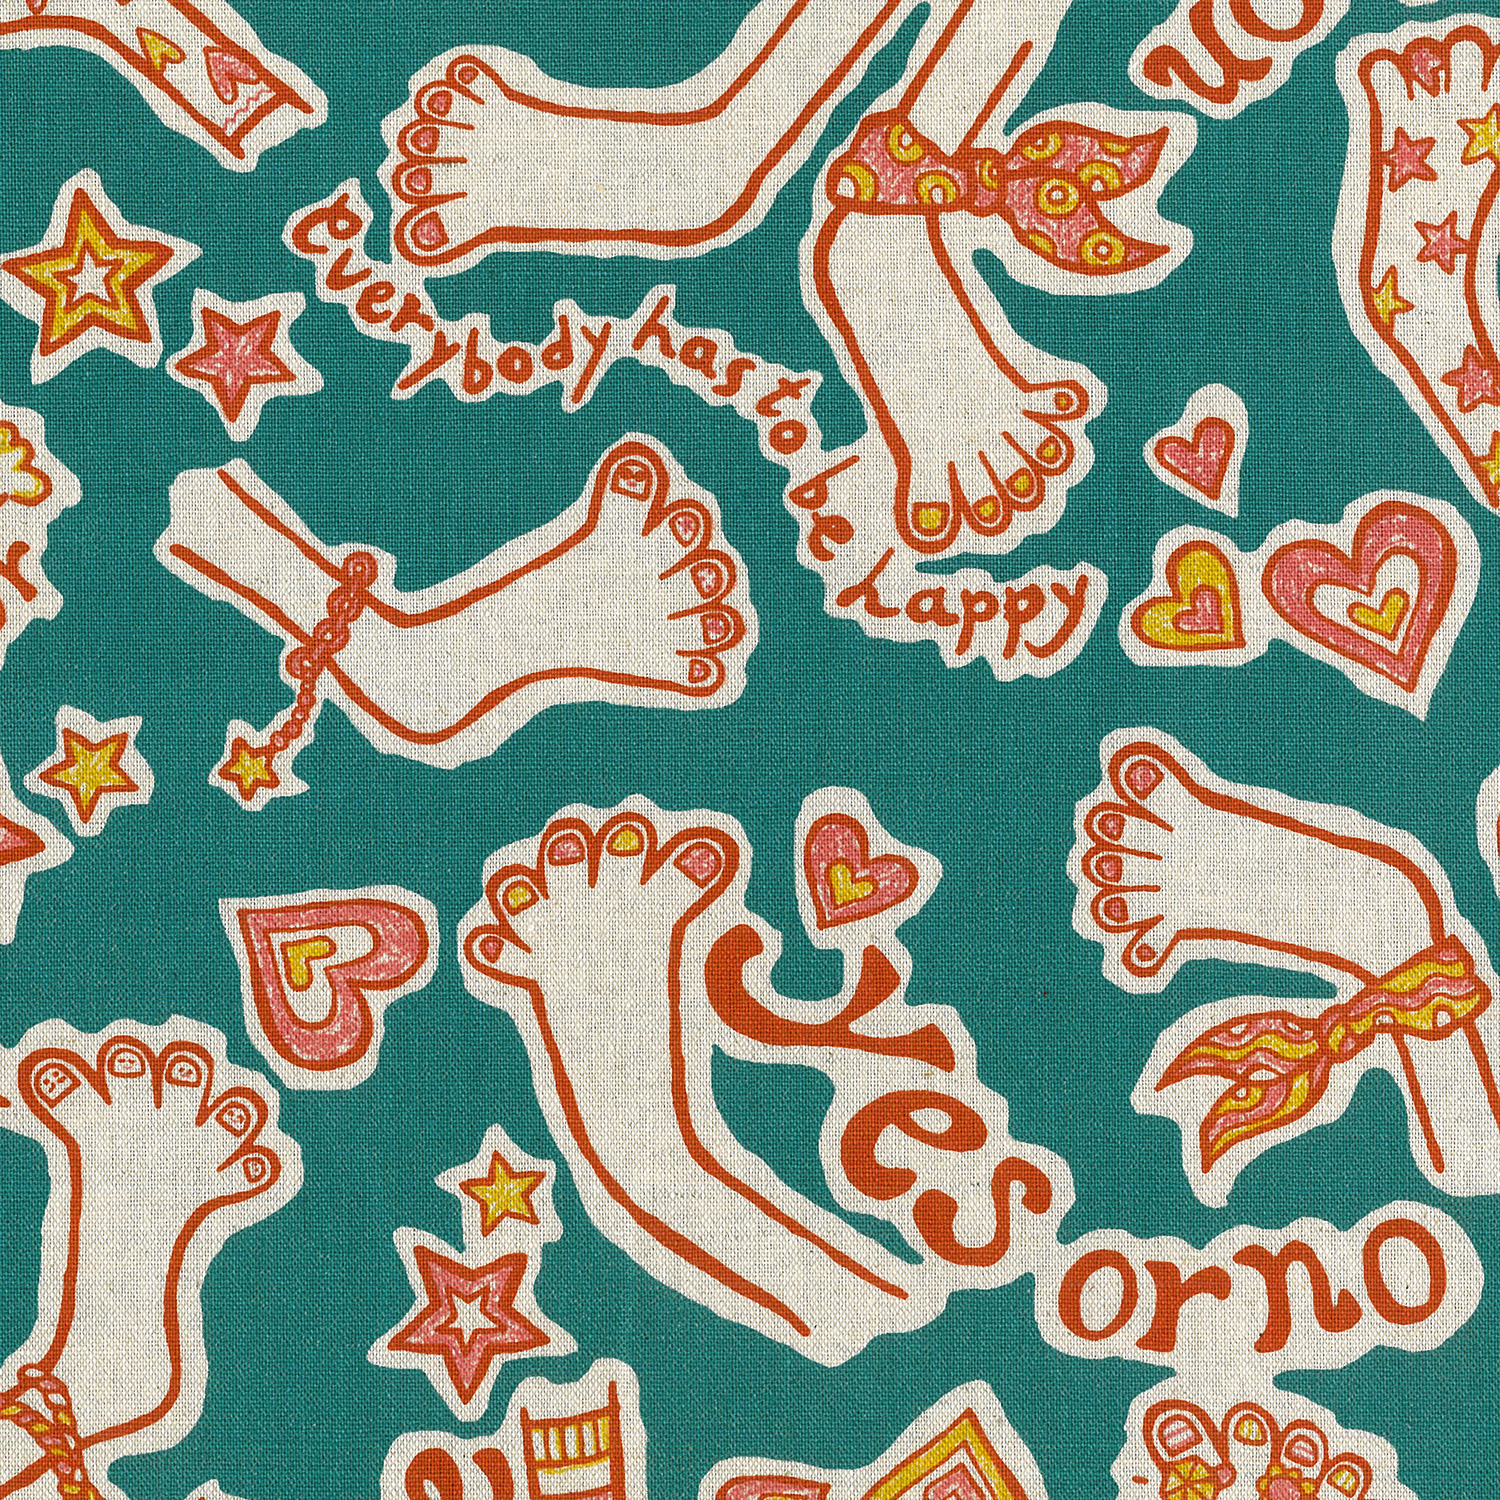 【WEB限定・原反特価】■MY061-D フット グリーン 綿麻キャンバス 巾約110cm 原反 (巻)